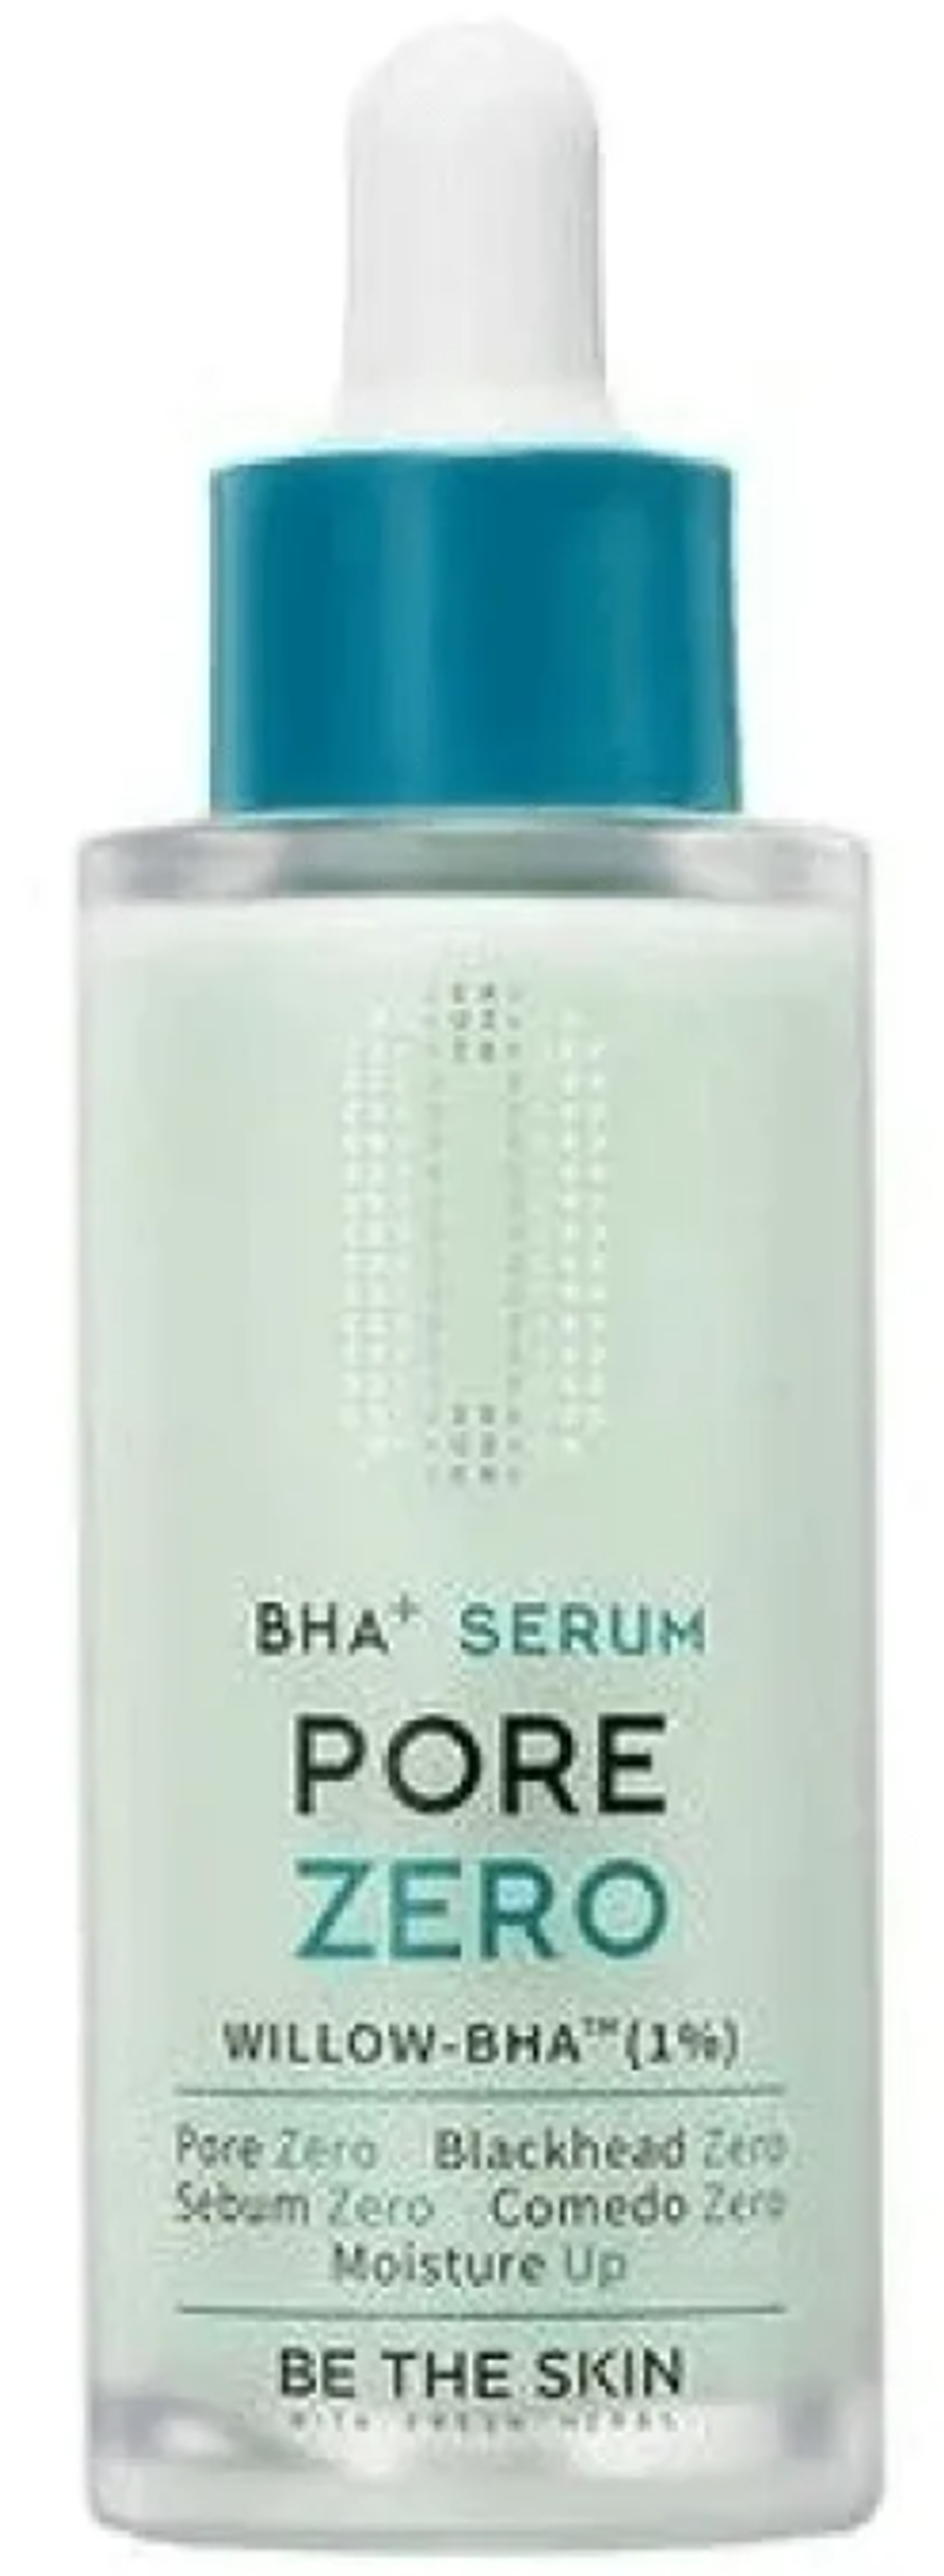 Be The Skin BHA+ Pore Zero Serum сыворотка для лица 30мл